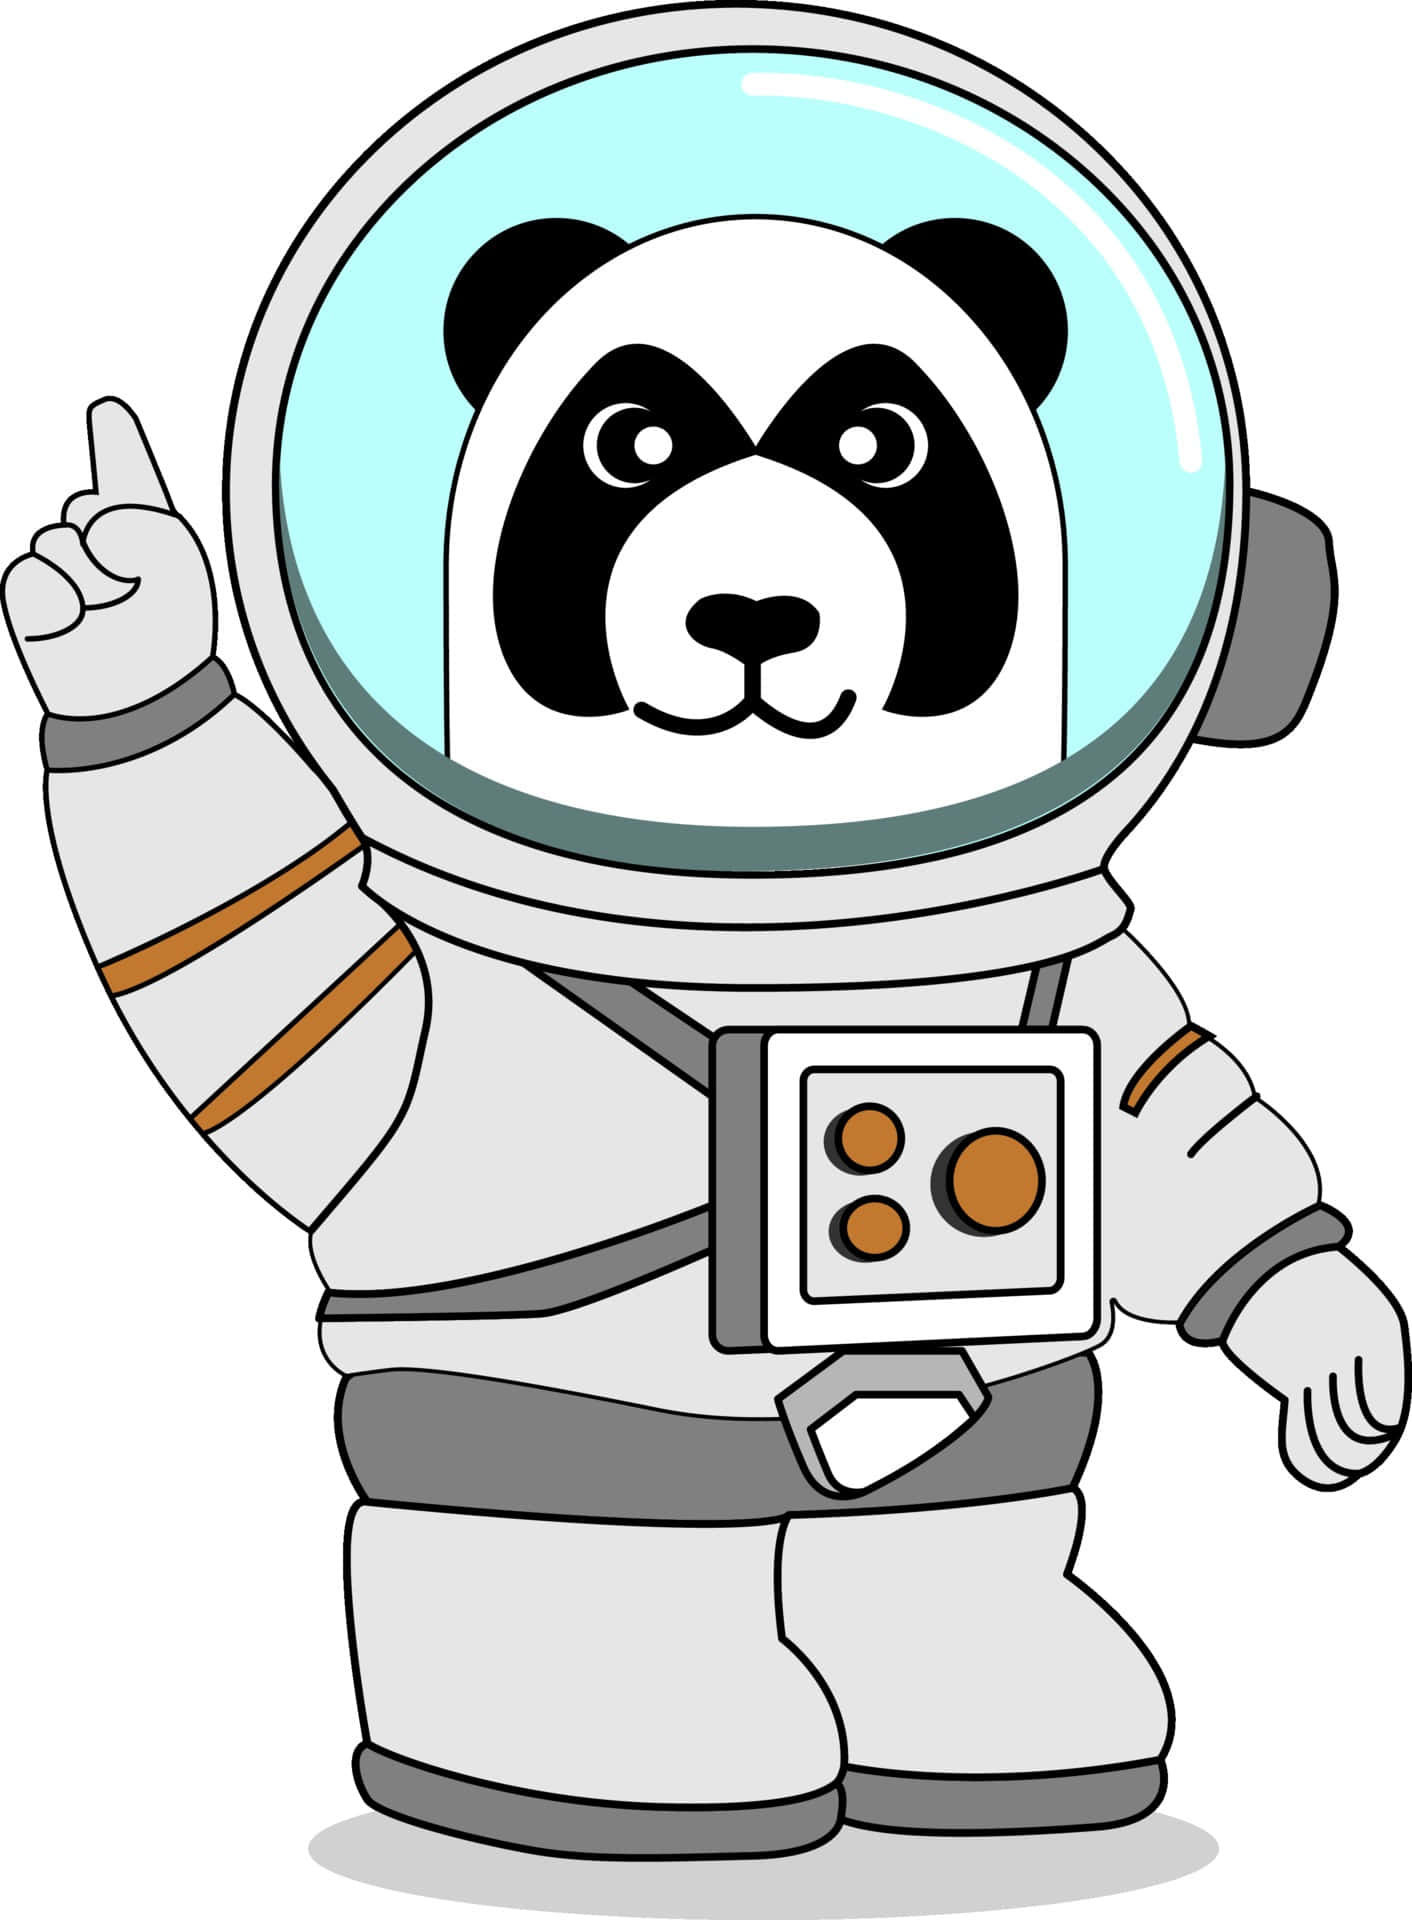 Imagende Perfil Genial De Xbox Con Un Panda Astronauta